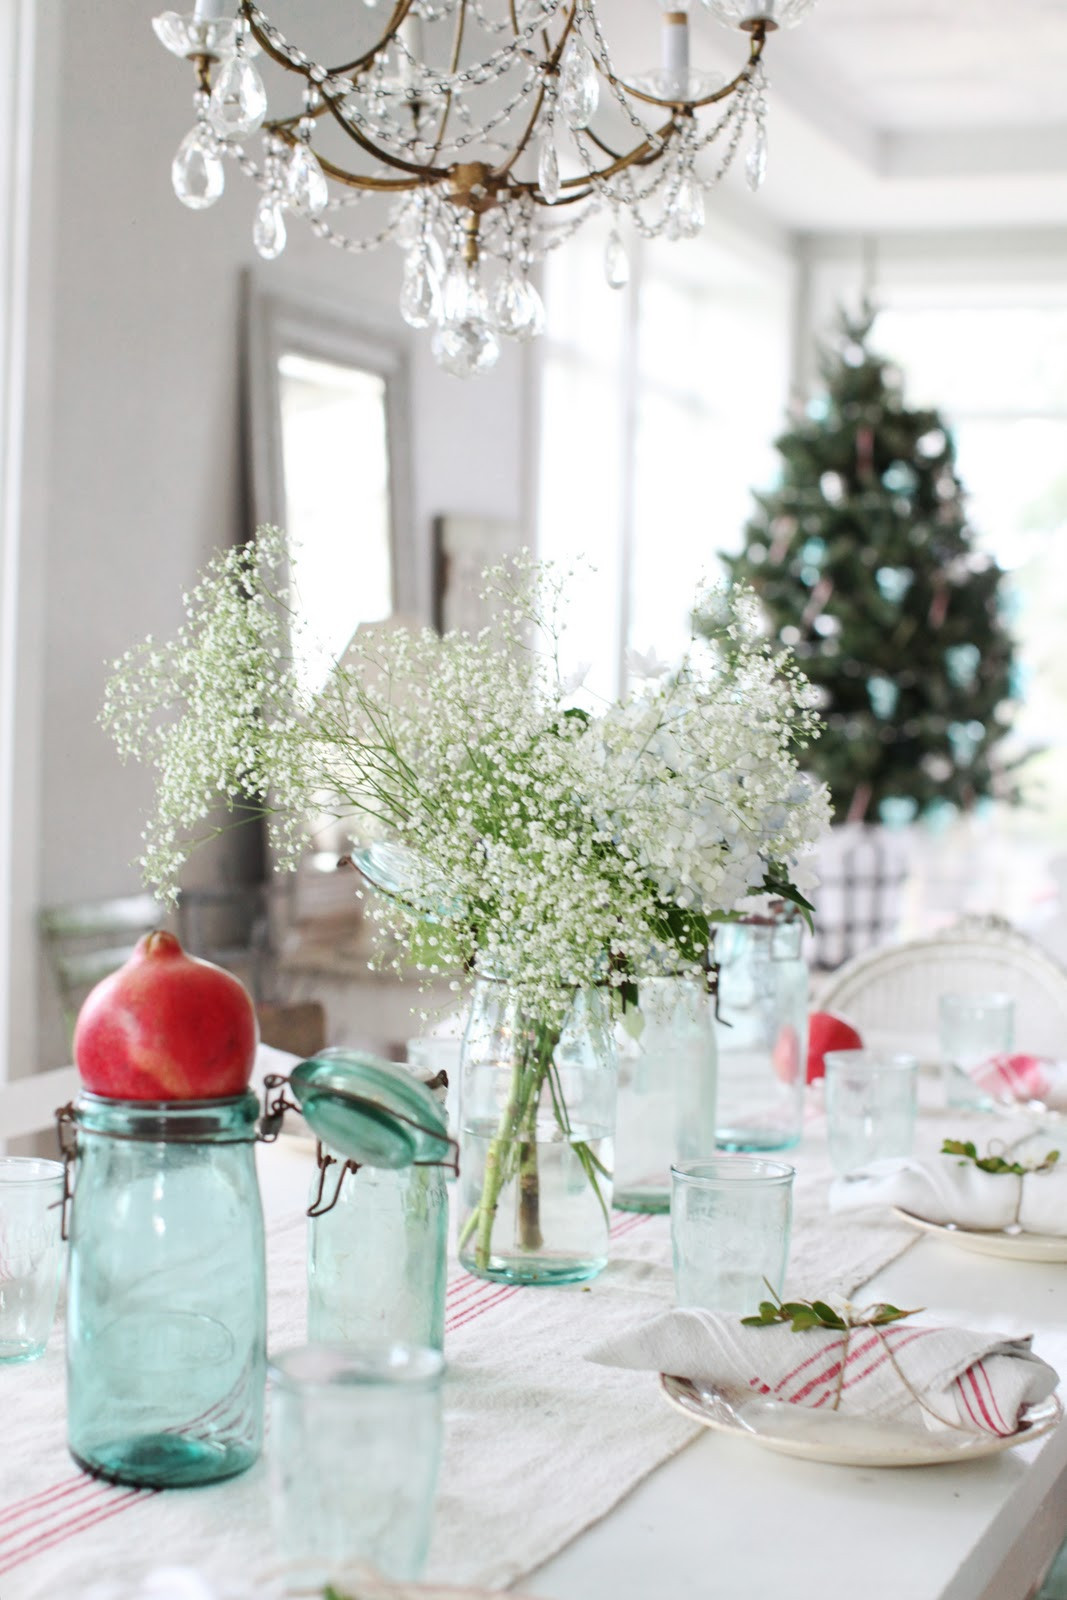 Christmas Table Centerpiece Ideas
 Dreamy Whites A Simple Christmas Table Setting